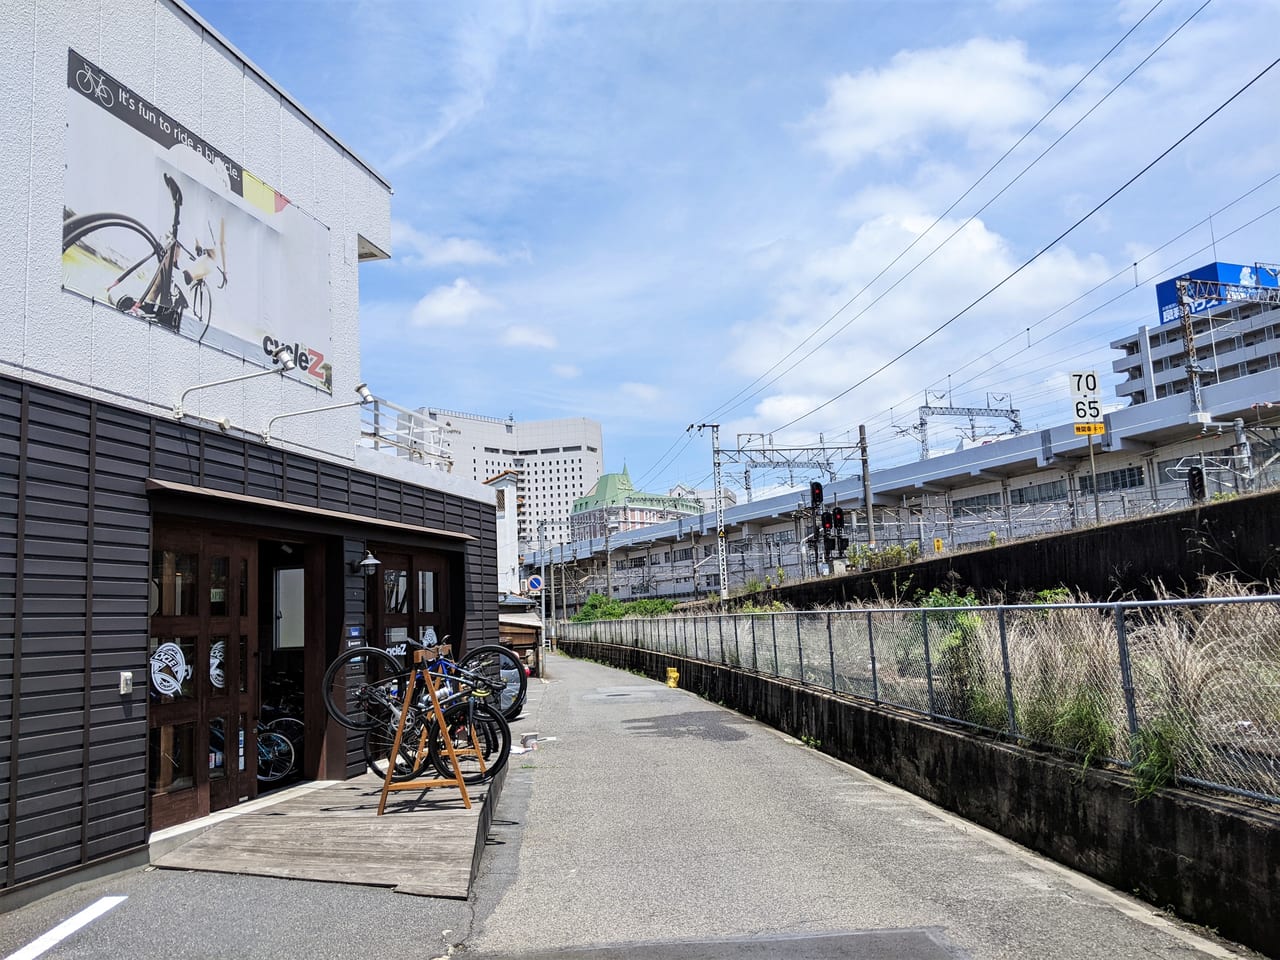 cycleZ（北区島田本町）